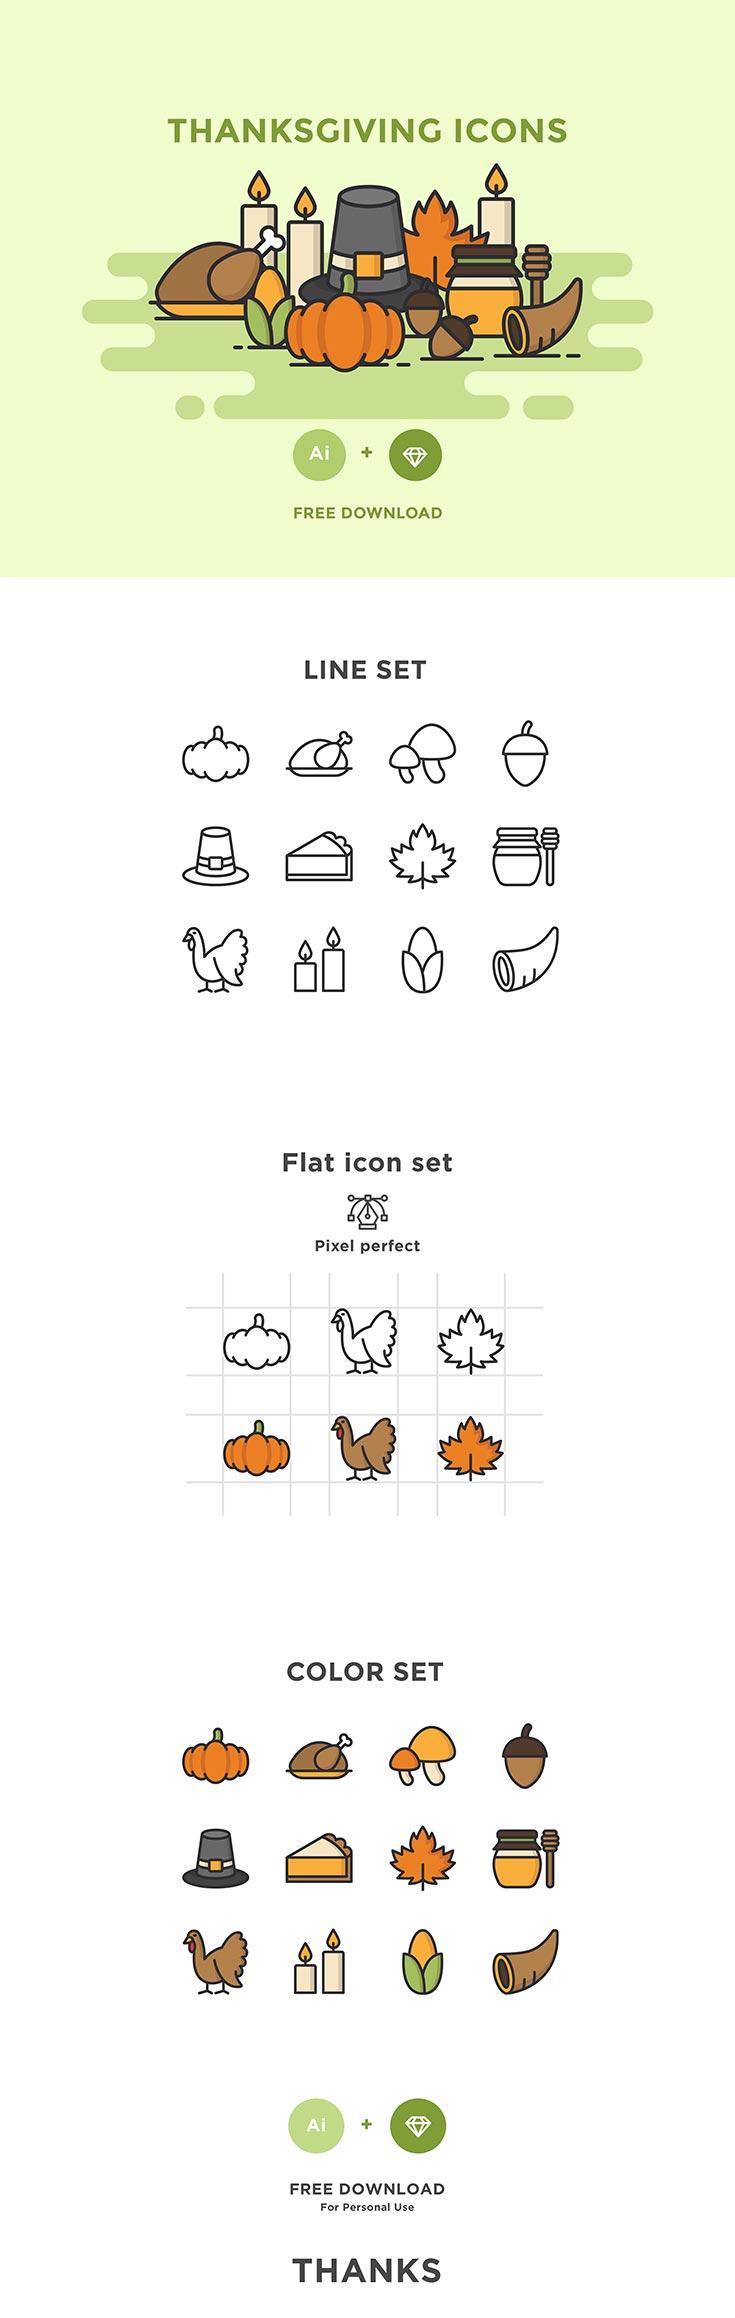 Free Thanksgiving Icons Pack | Creativetacos